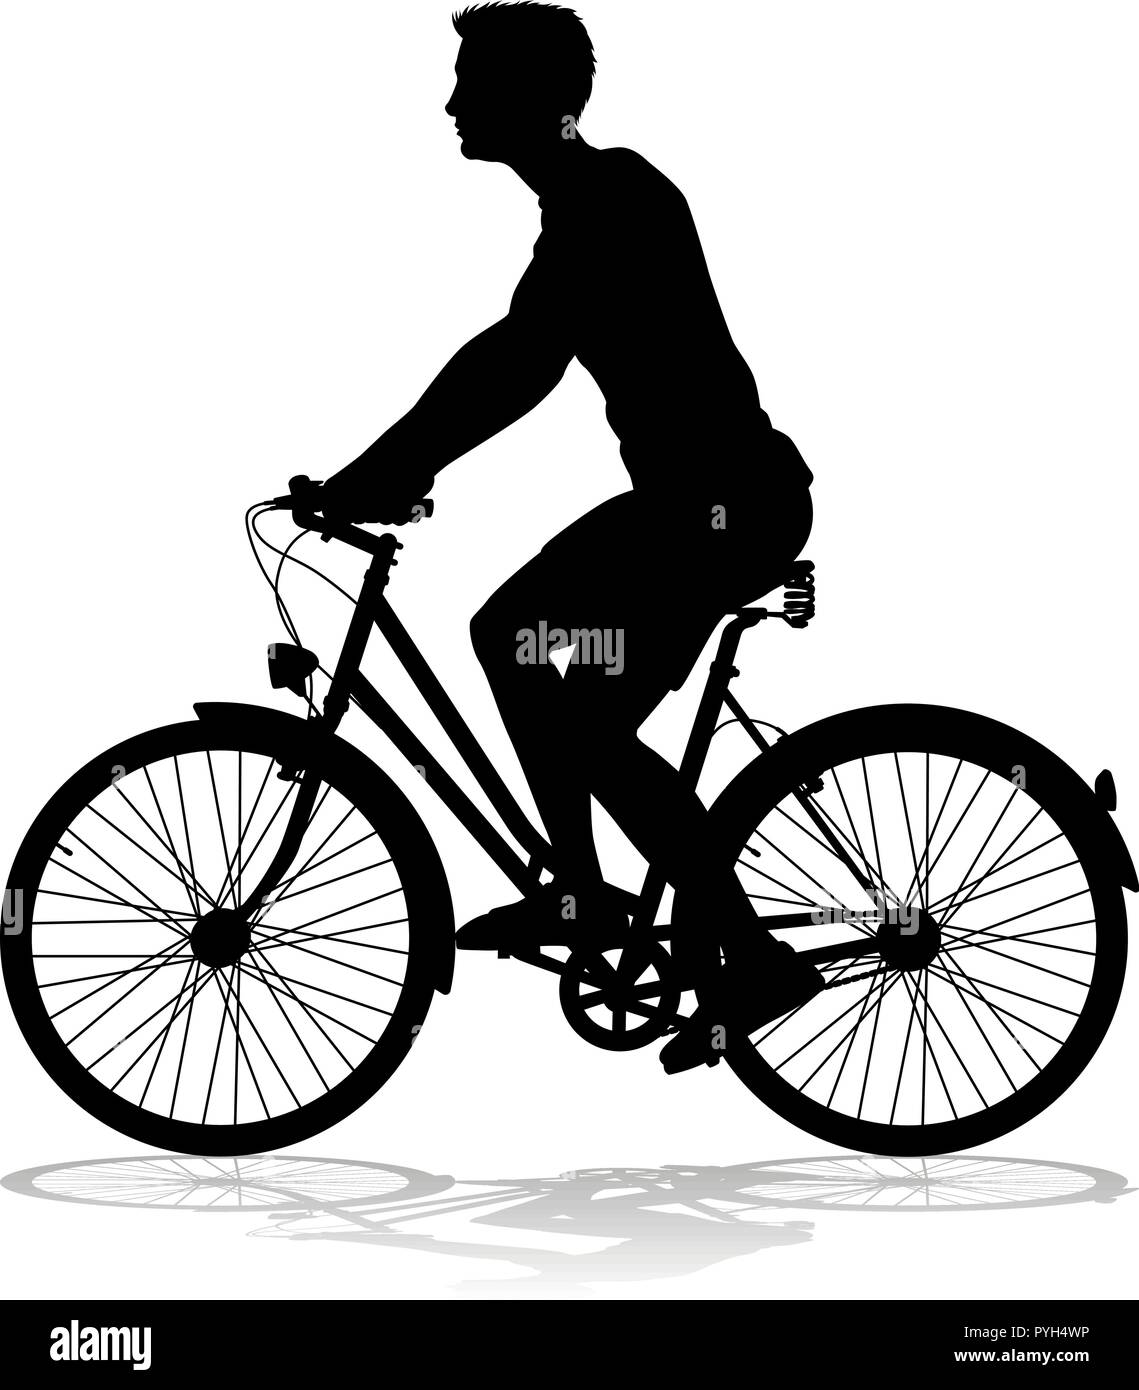 Bike racing Stock Vector Images - Alamy